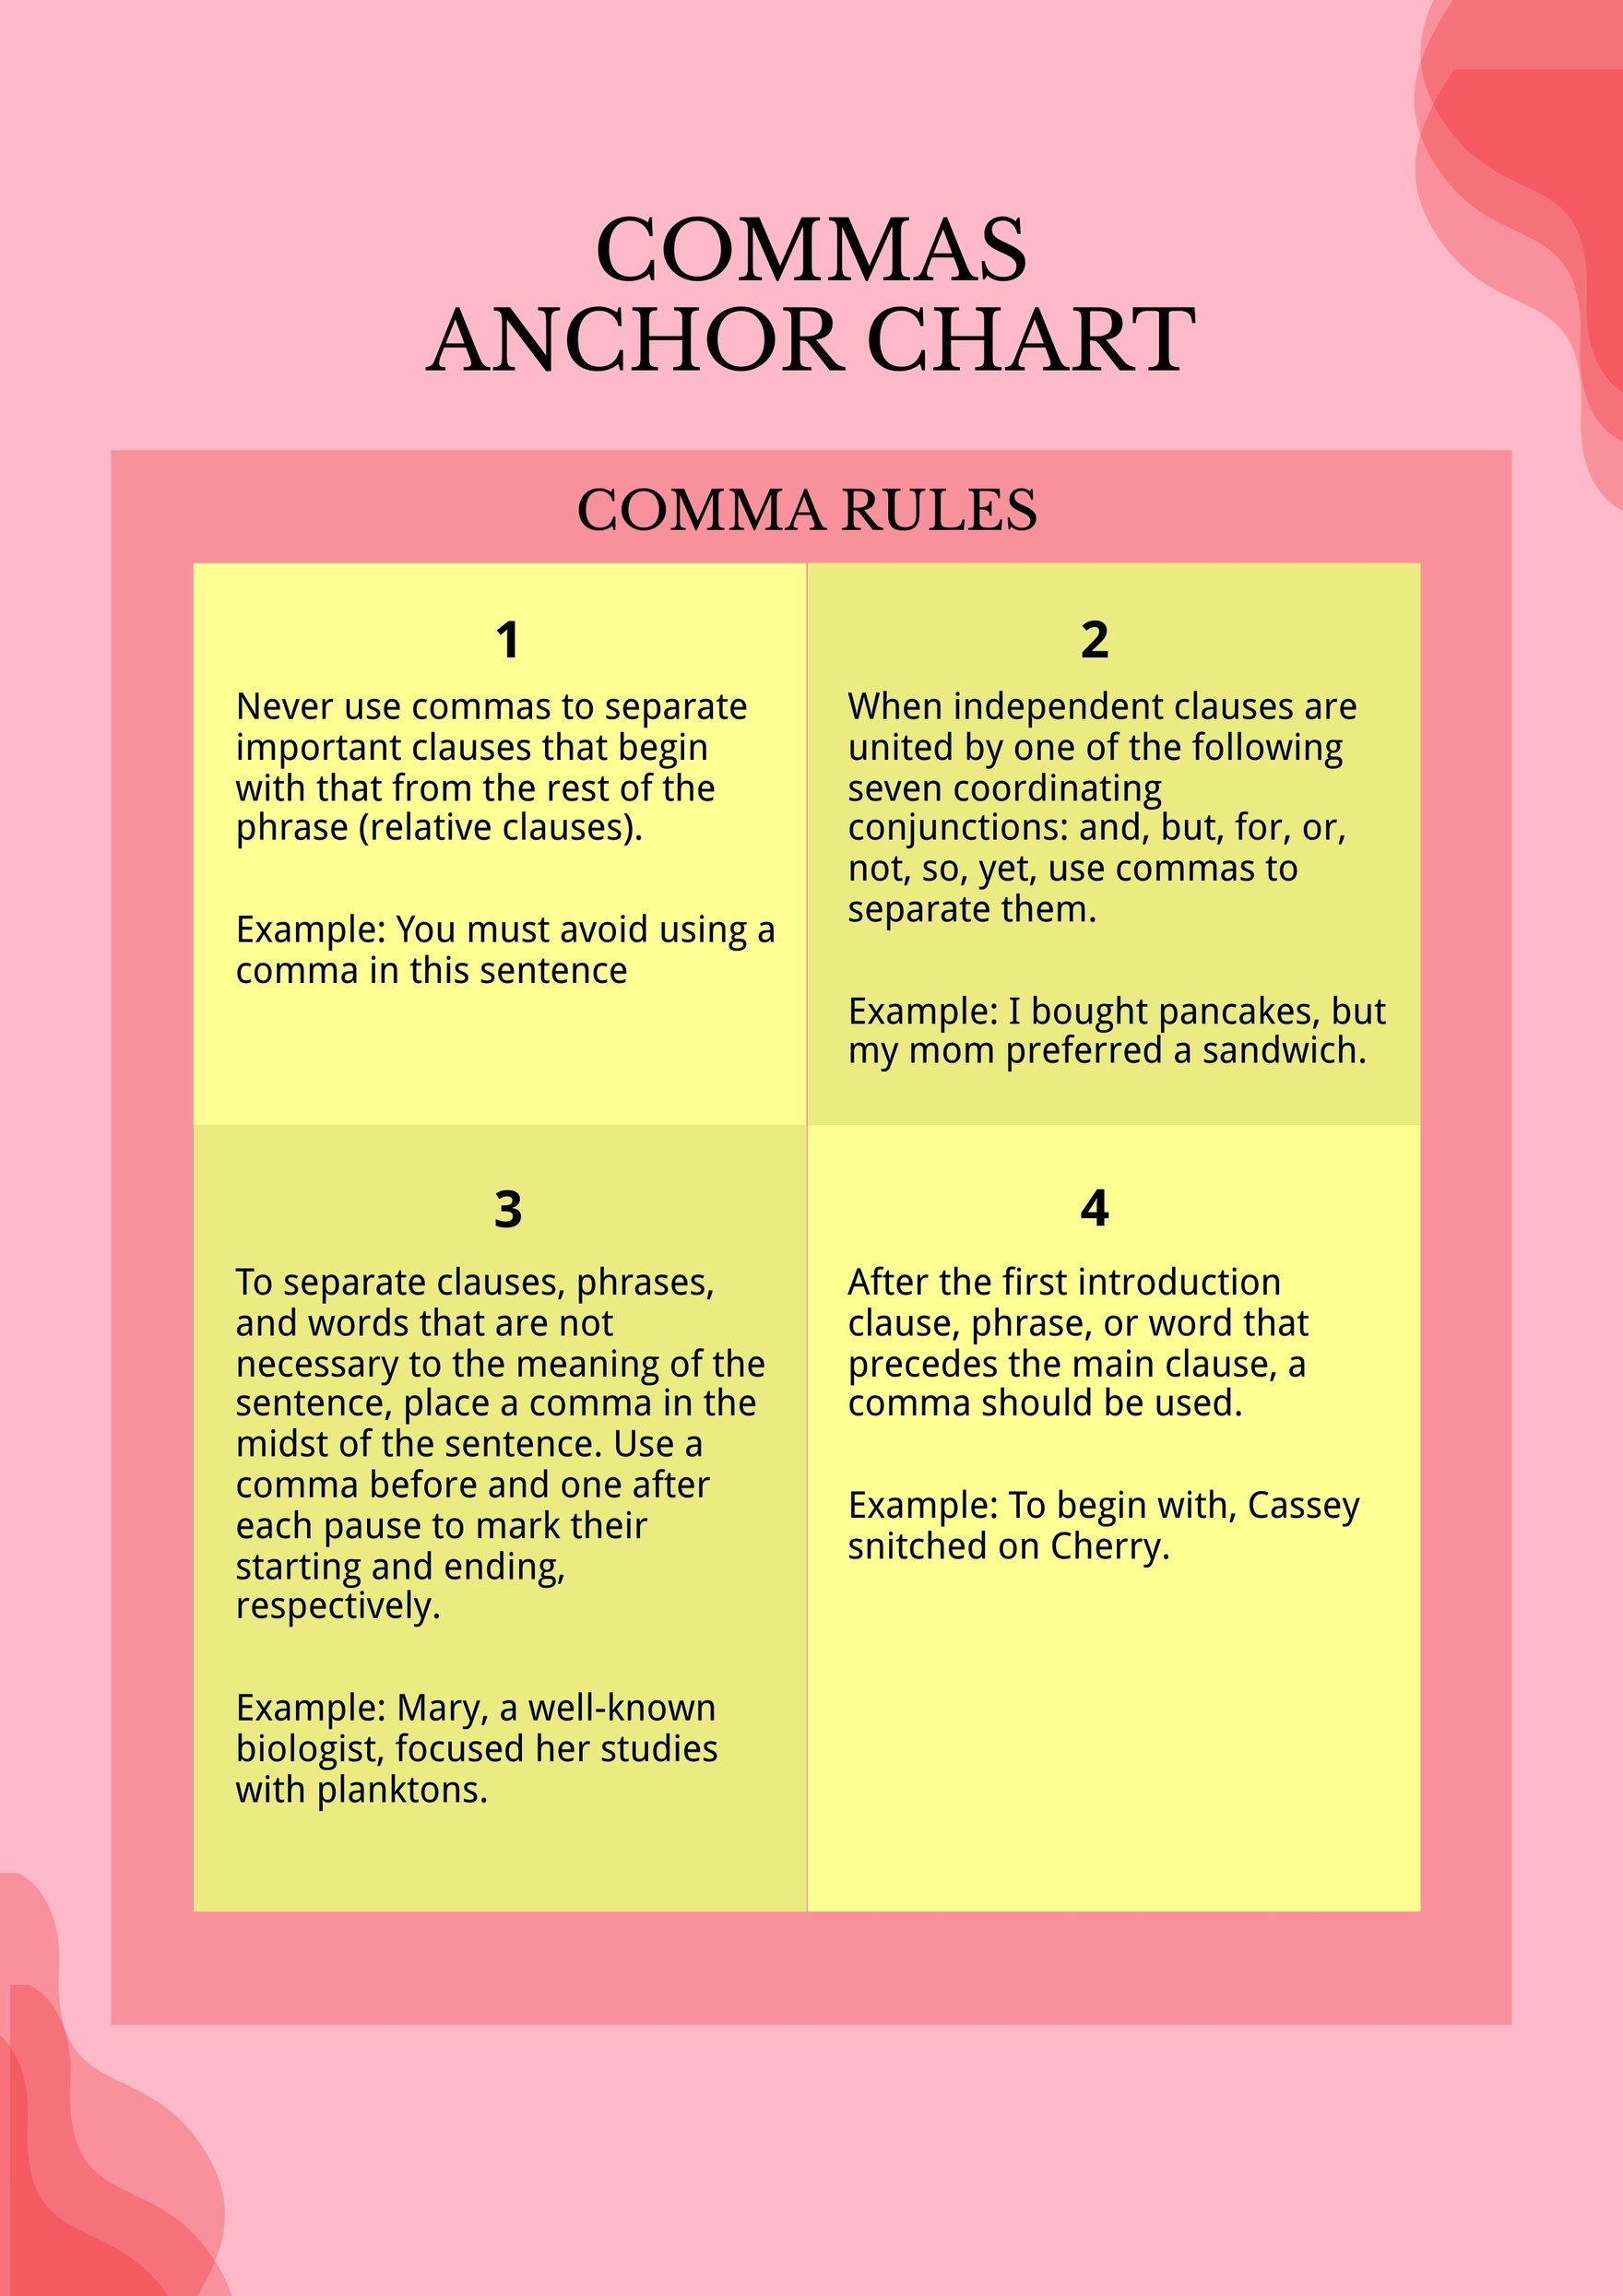 Commas Anchor Chart in PDF, Illustrator